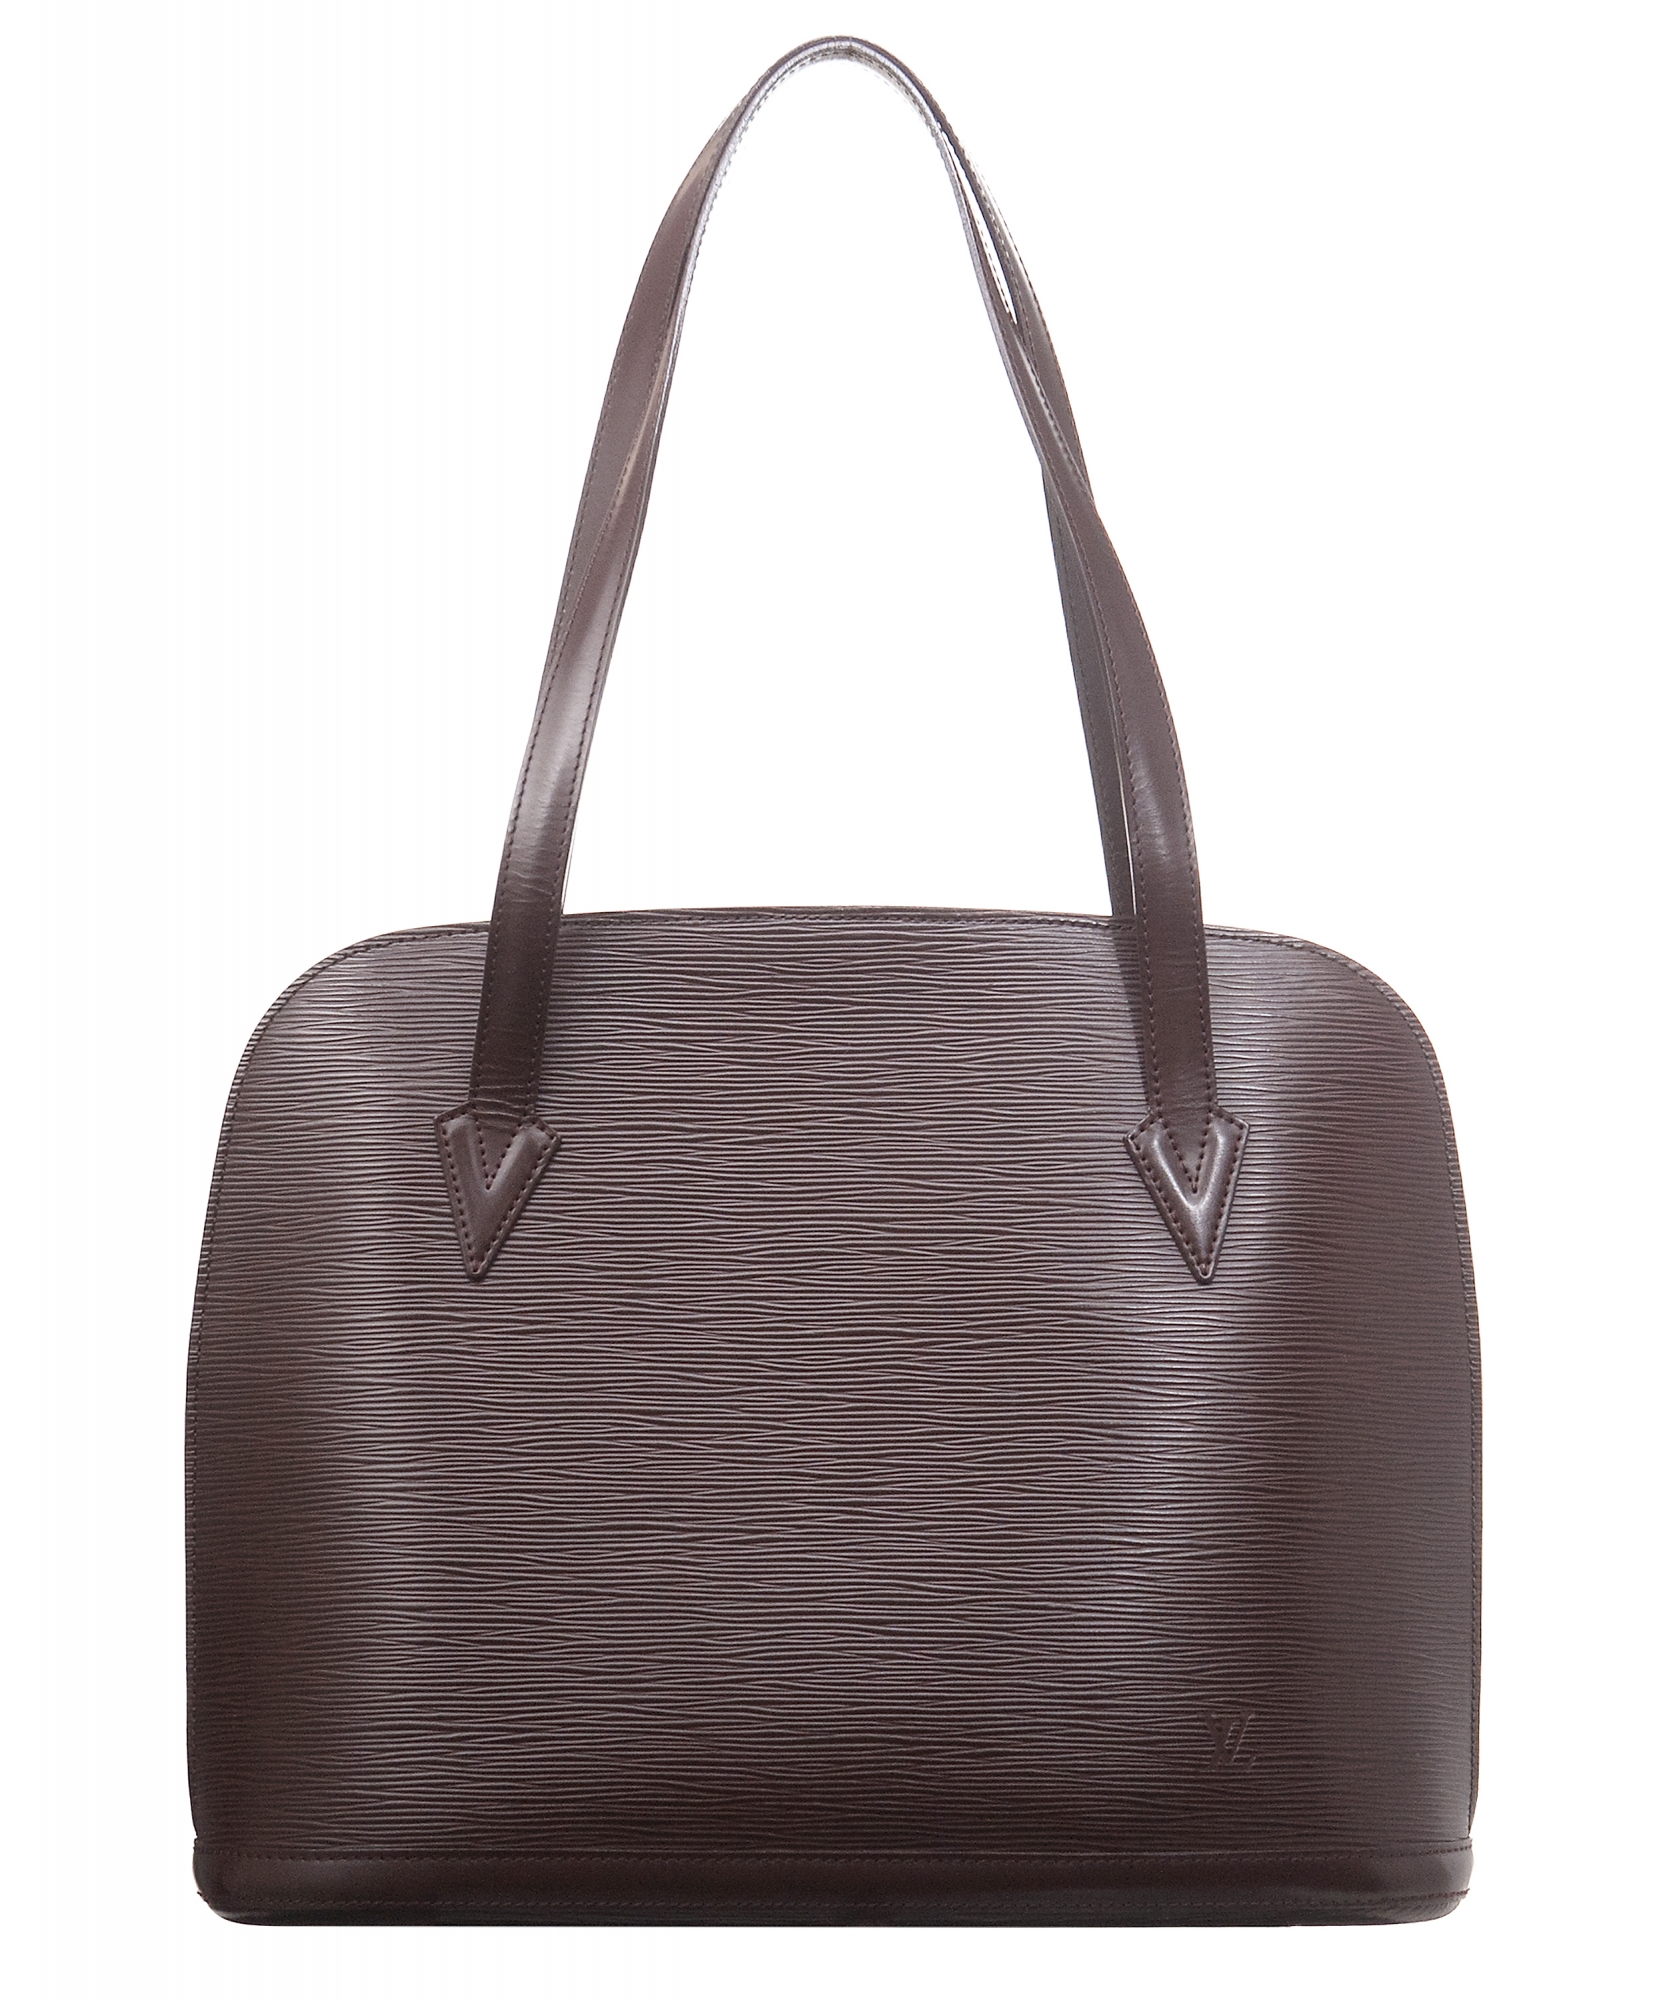 Shop authentic Louis Vuitton Epi Leather Lussac Tote at revogue for just  USD 550.00